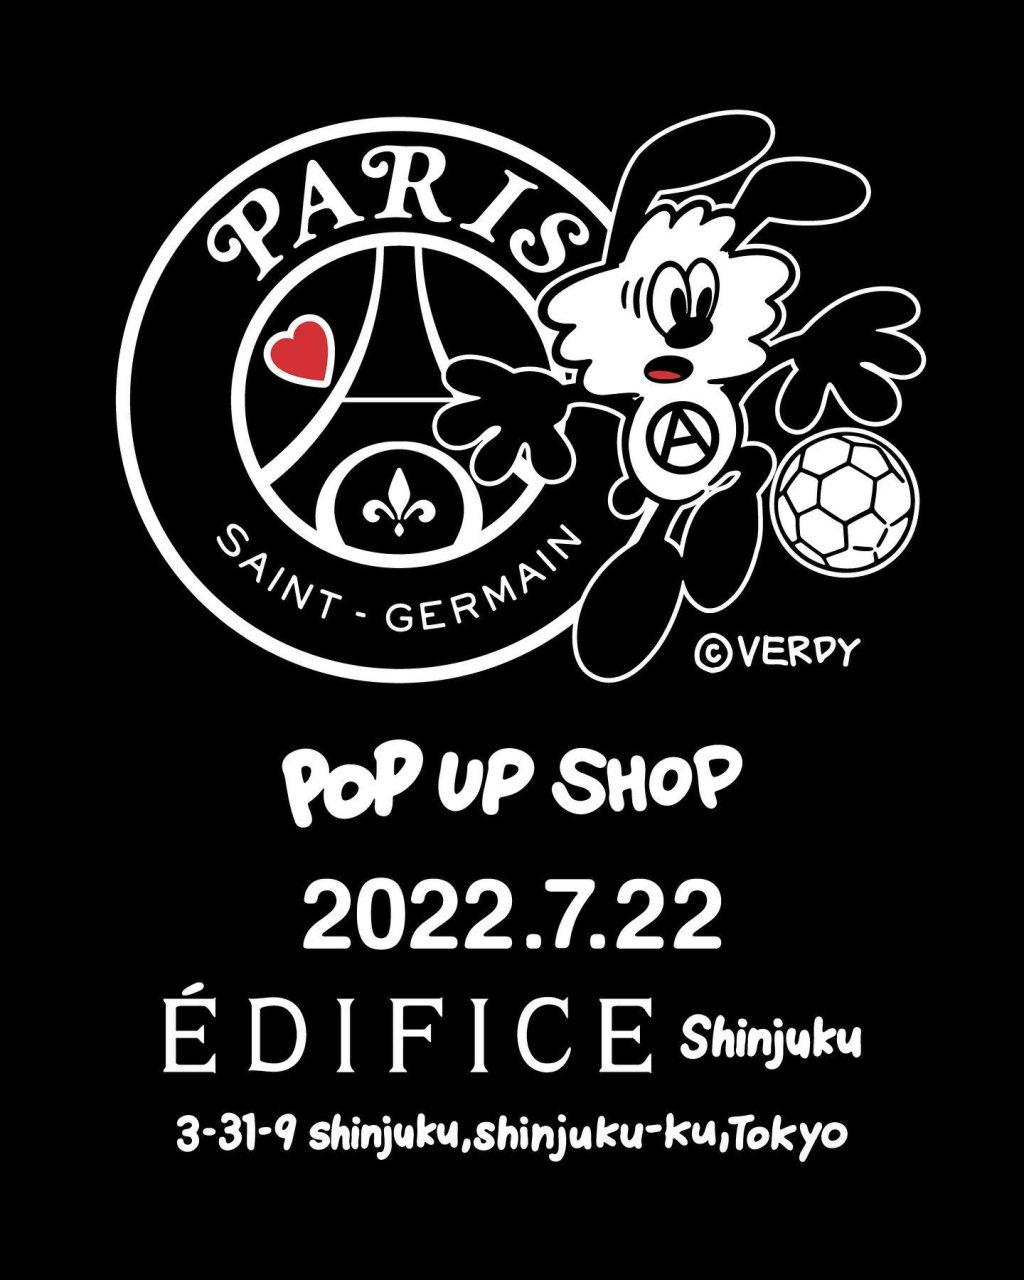 verdy-paris-saint-germain-pop-up-shop-open-20220722-at-edifice-shinjuku